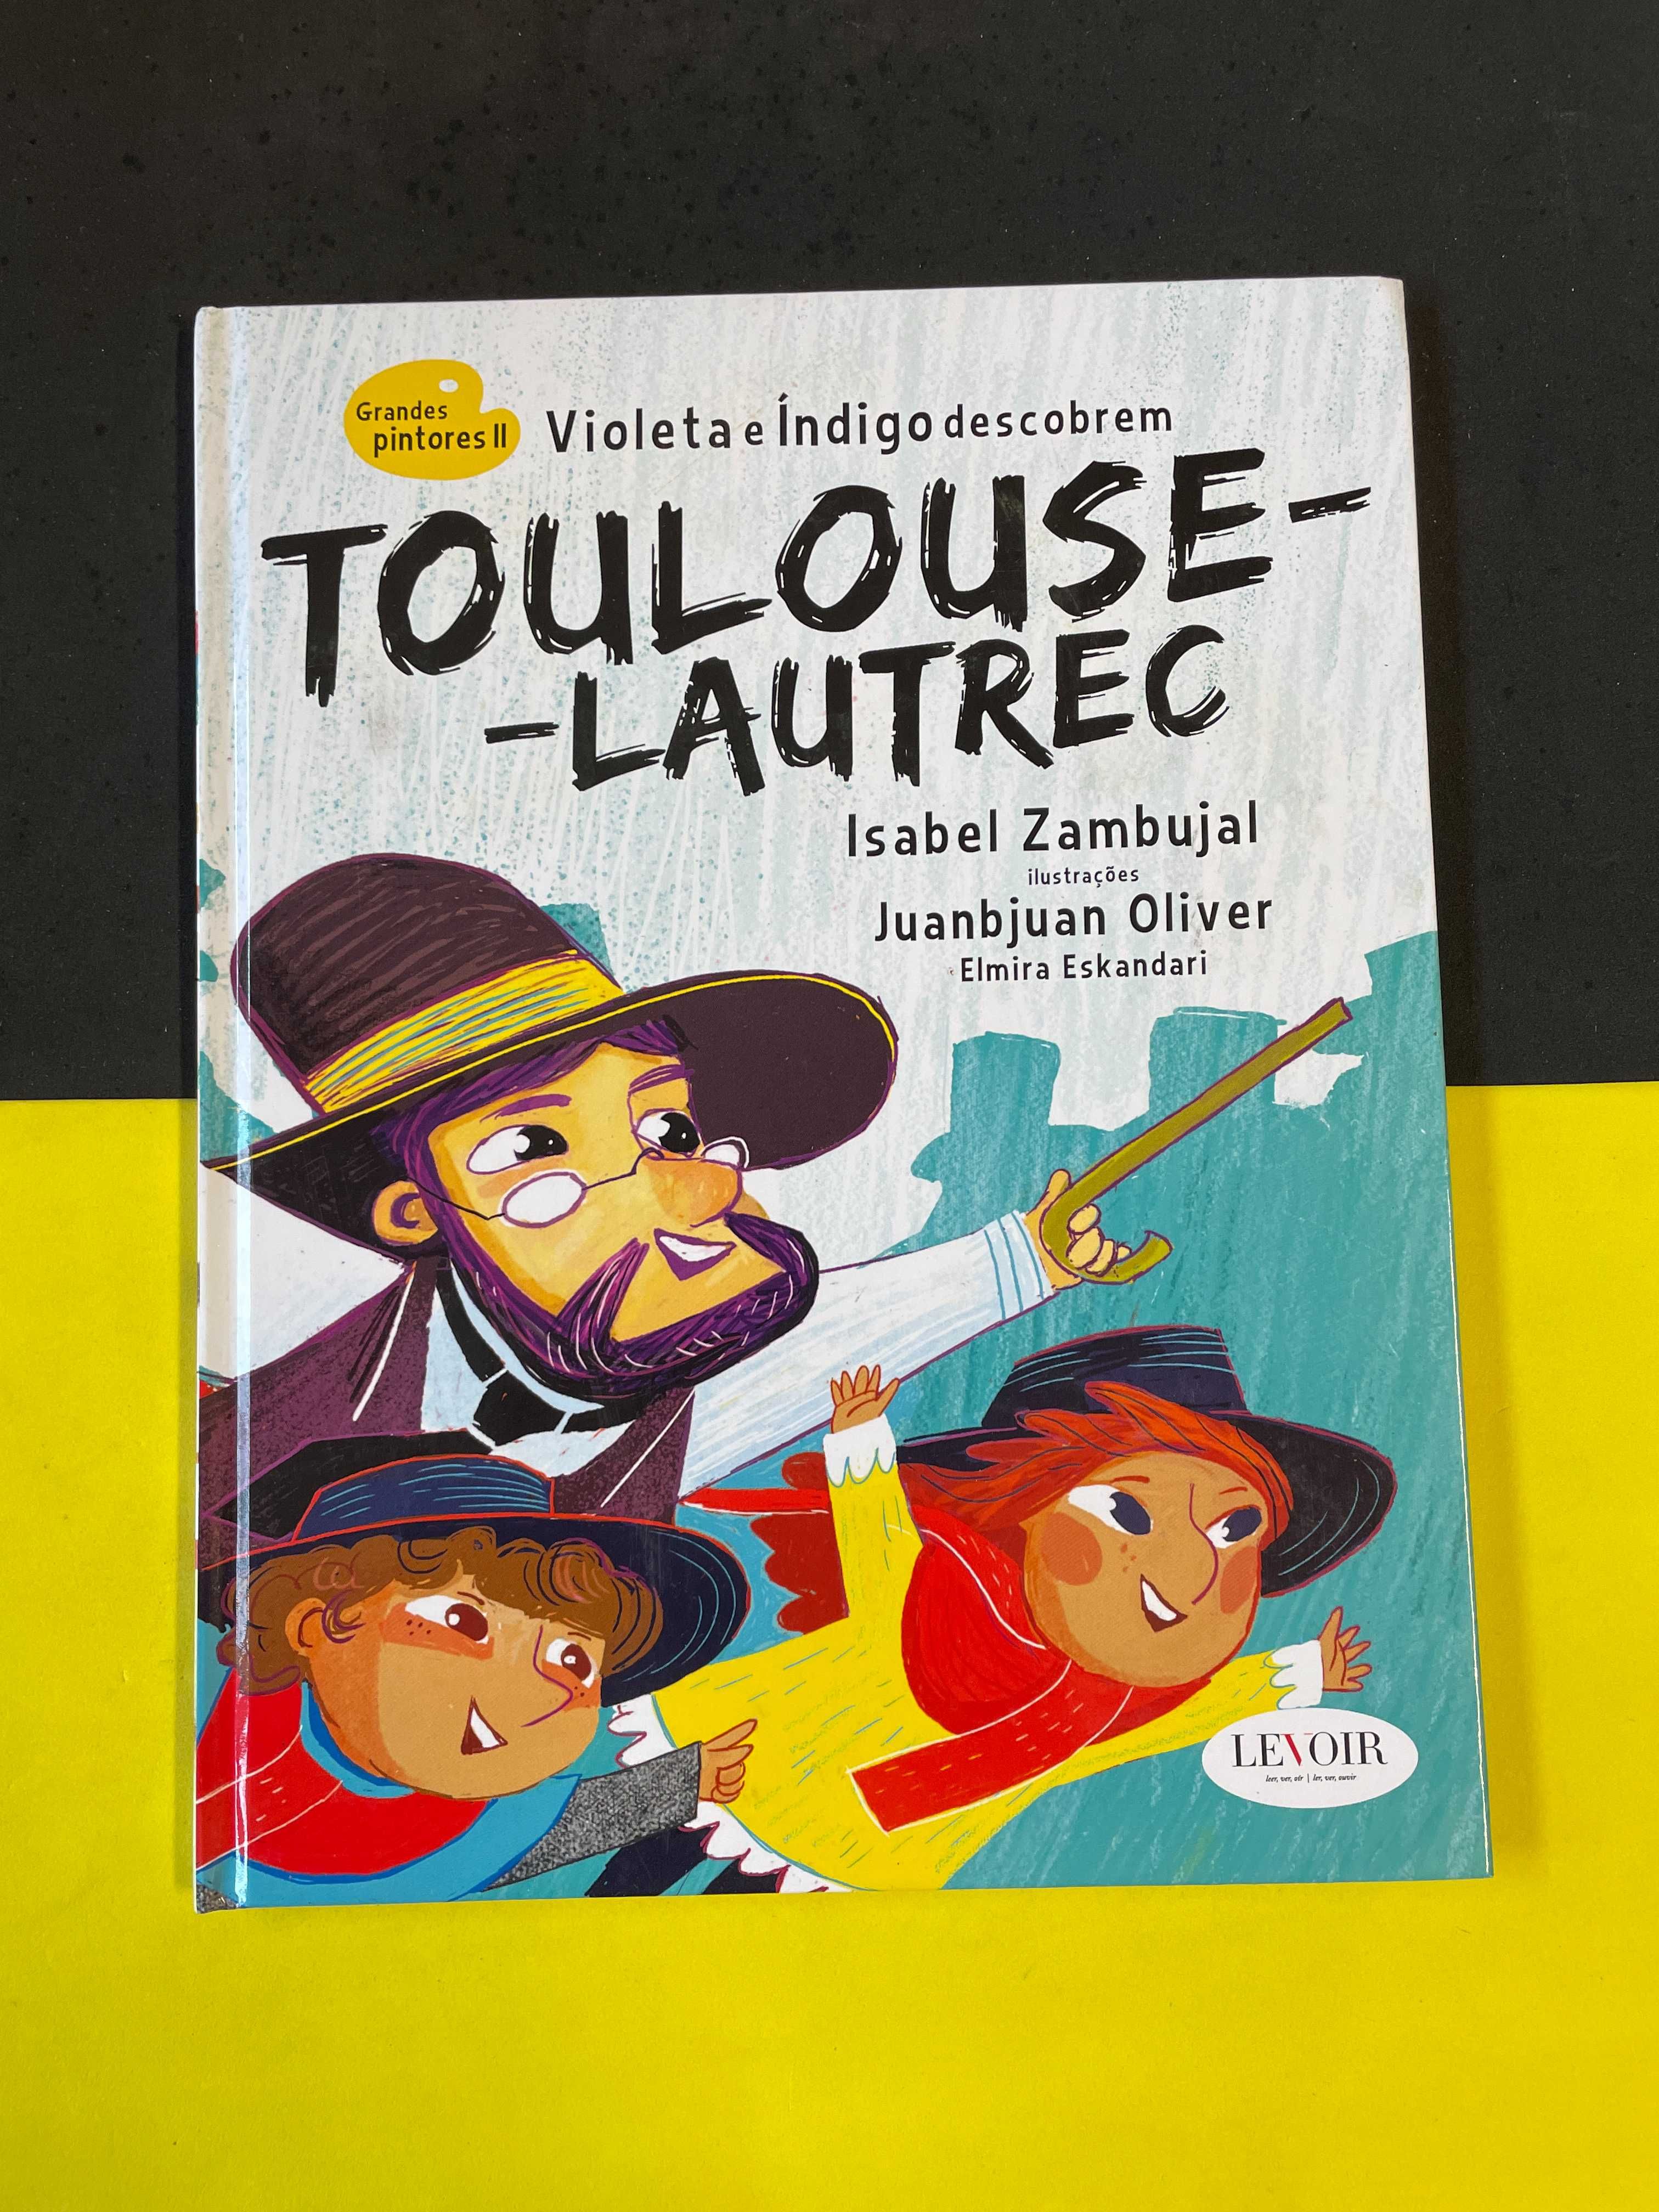 Isabel Zambujal - Violeta e Índigo descobrem Toulose- Lautrec